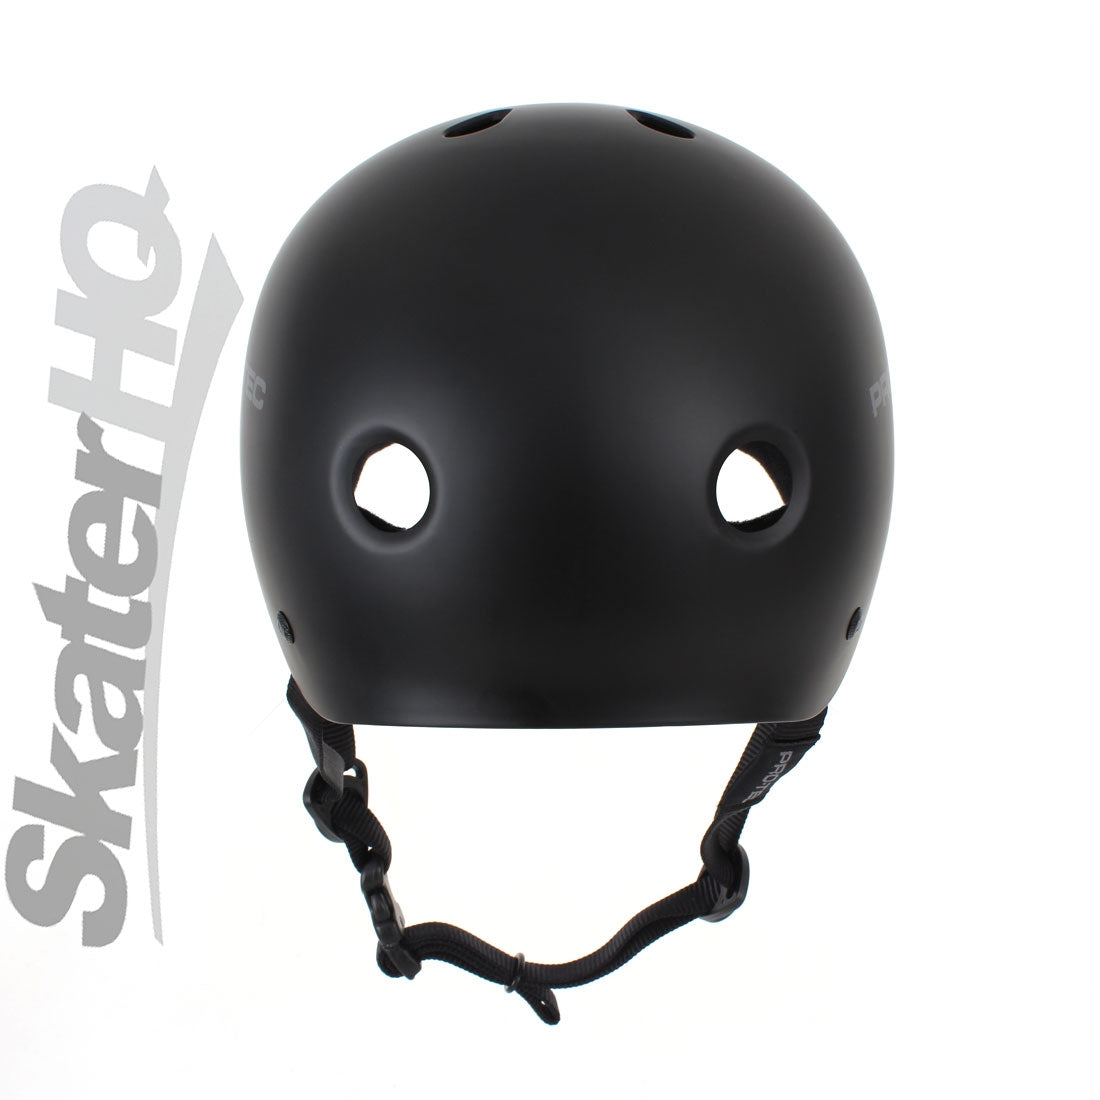 Pro-Tec Classic Skate Matte Black - XLarge Helmets